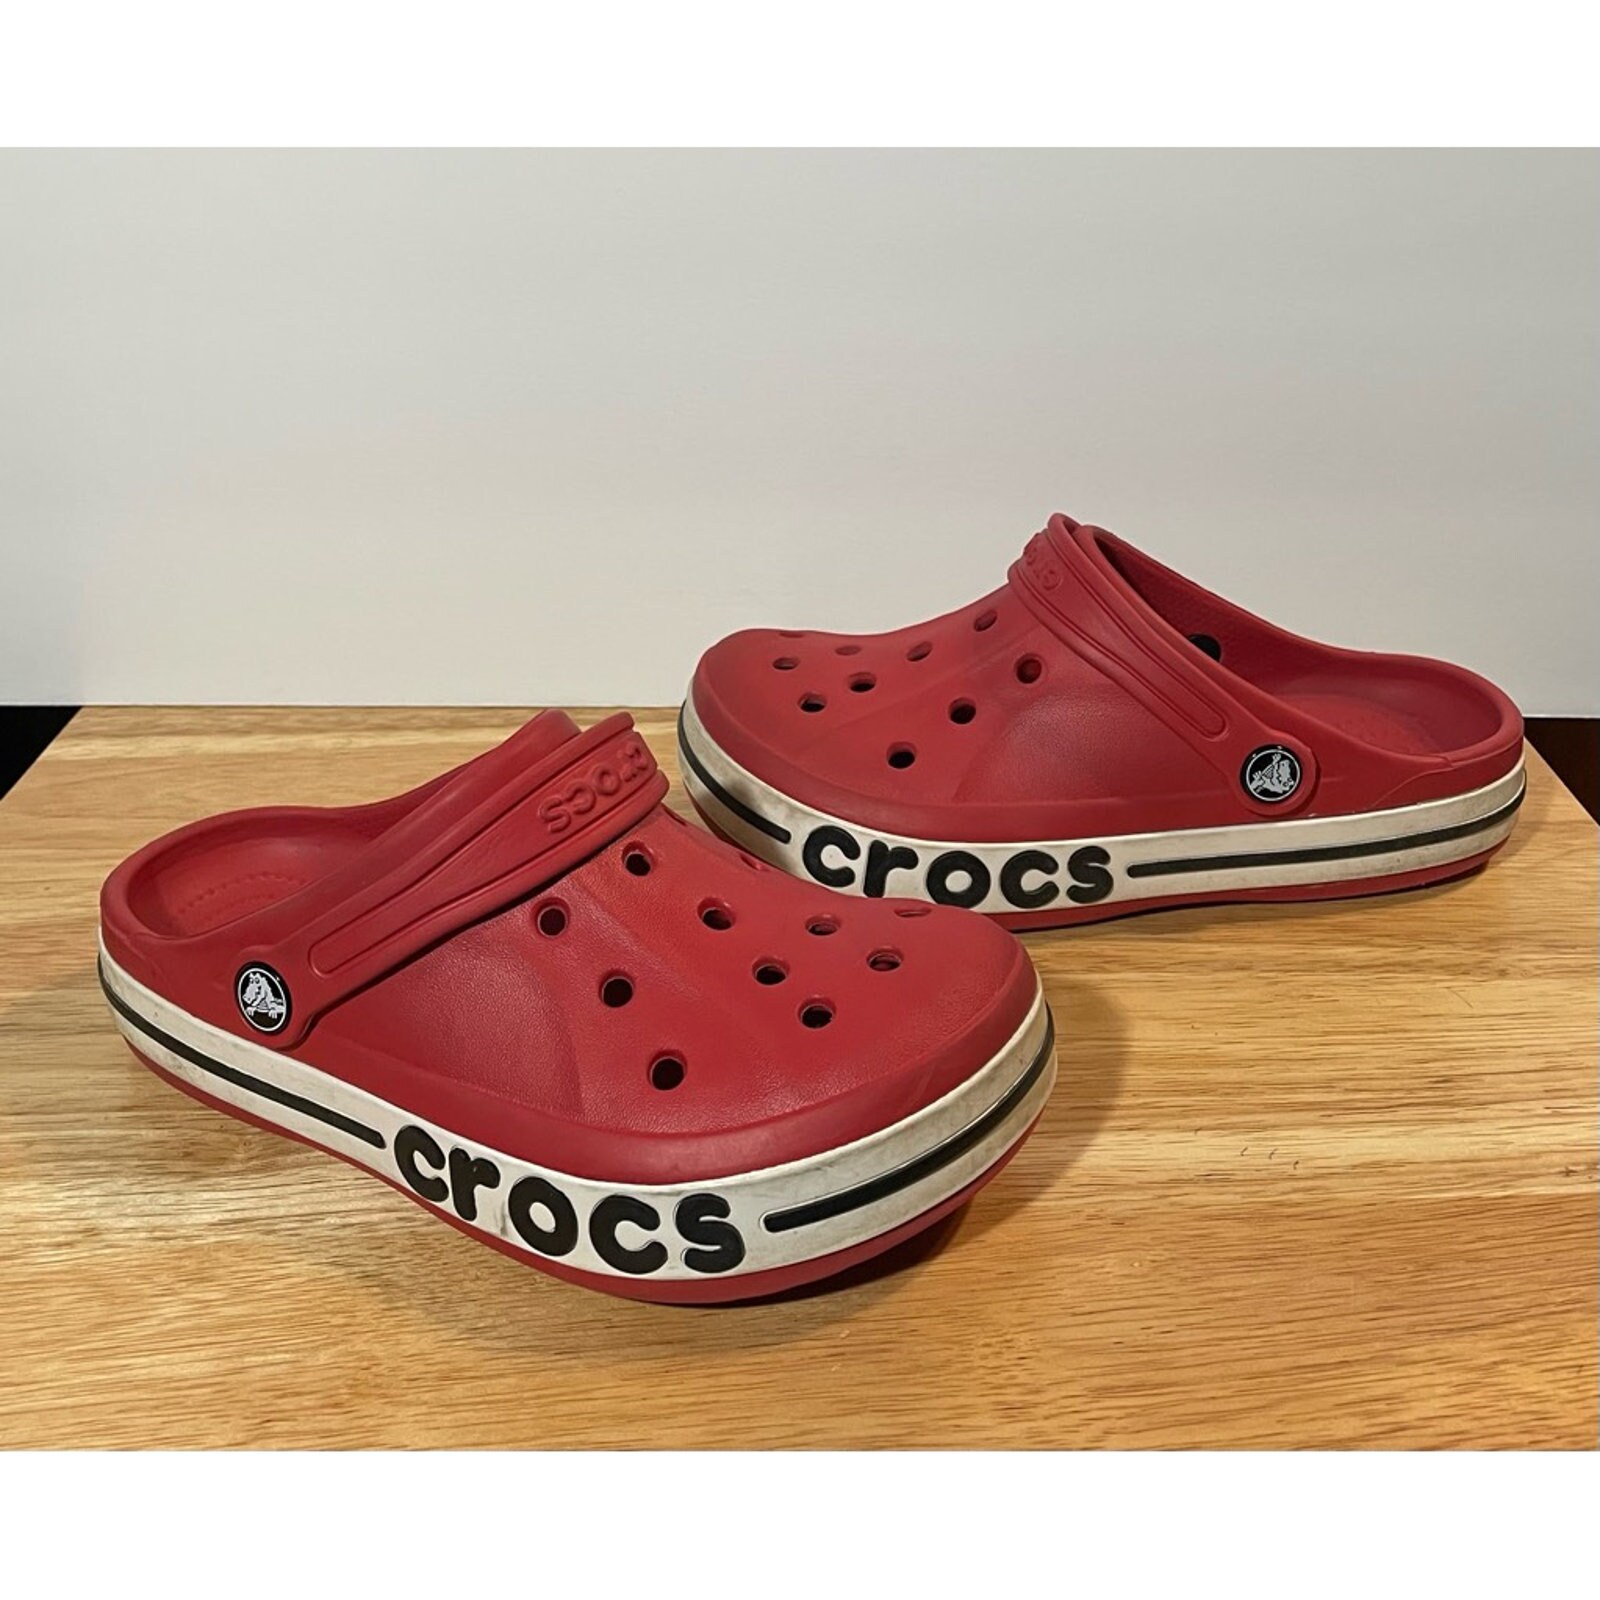 Crocs Unisex Kids Clogs Shoes Red White Round Toe Perforated Slingback 3 Zapatos Zapatos para niña Botas 